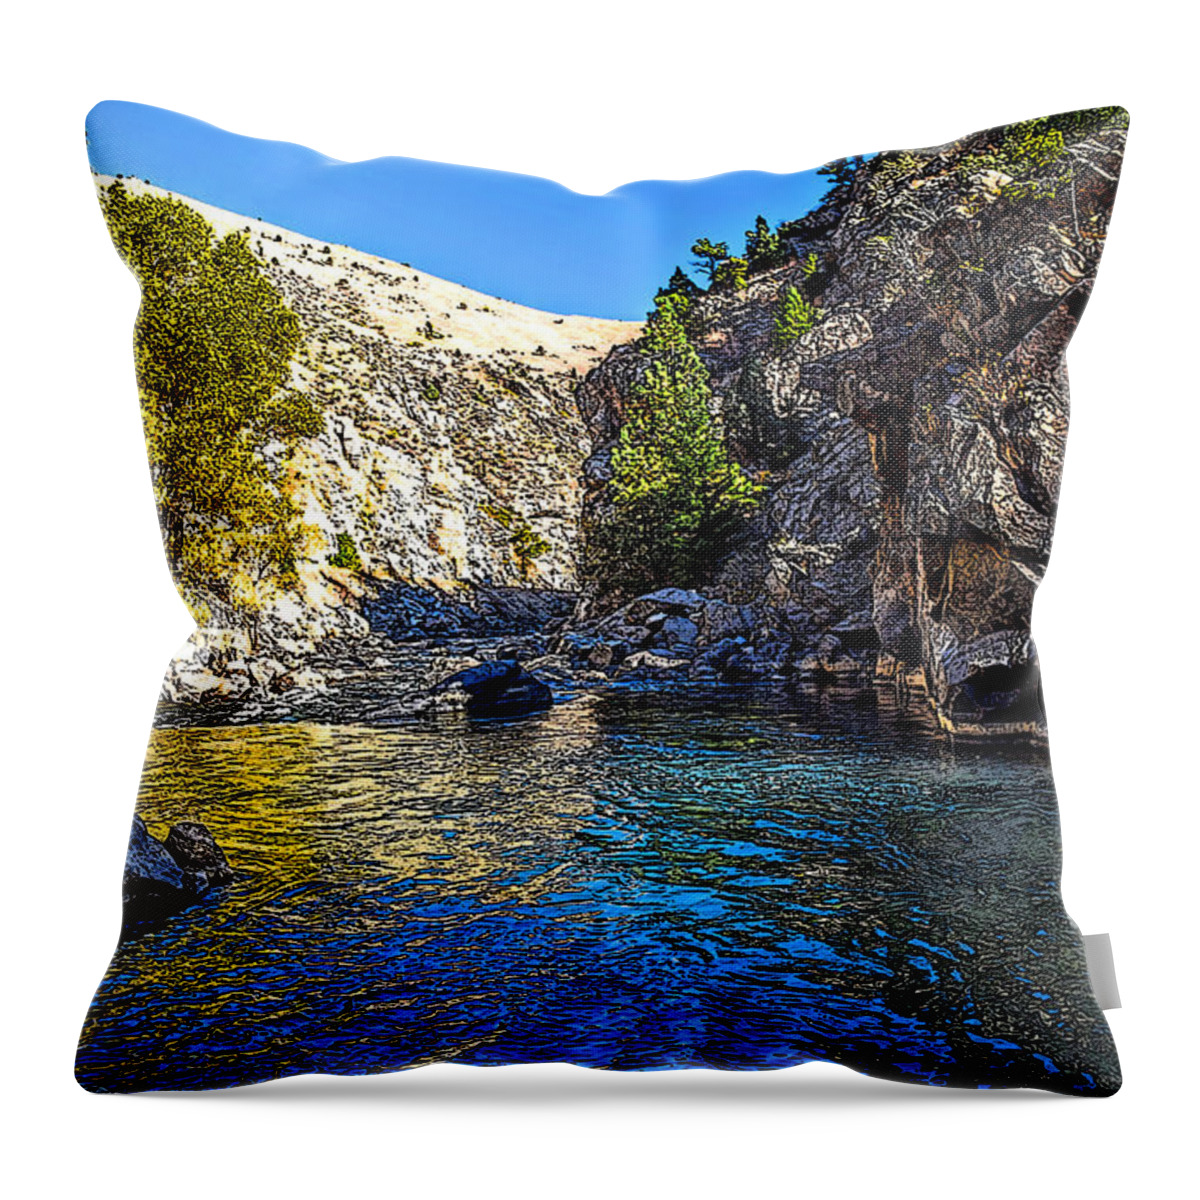 Stream Throw Pillow featuring the digital art Canyon Bend - Digital Texturing by Michael Brungardt